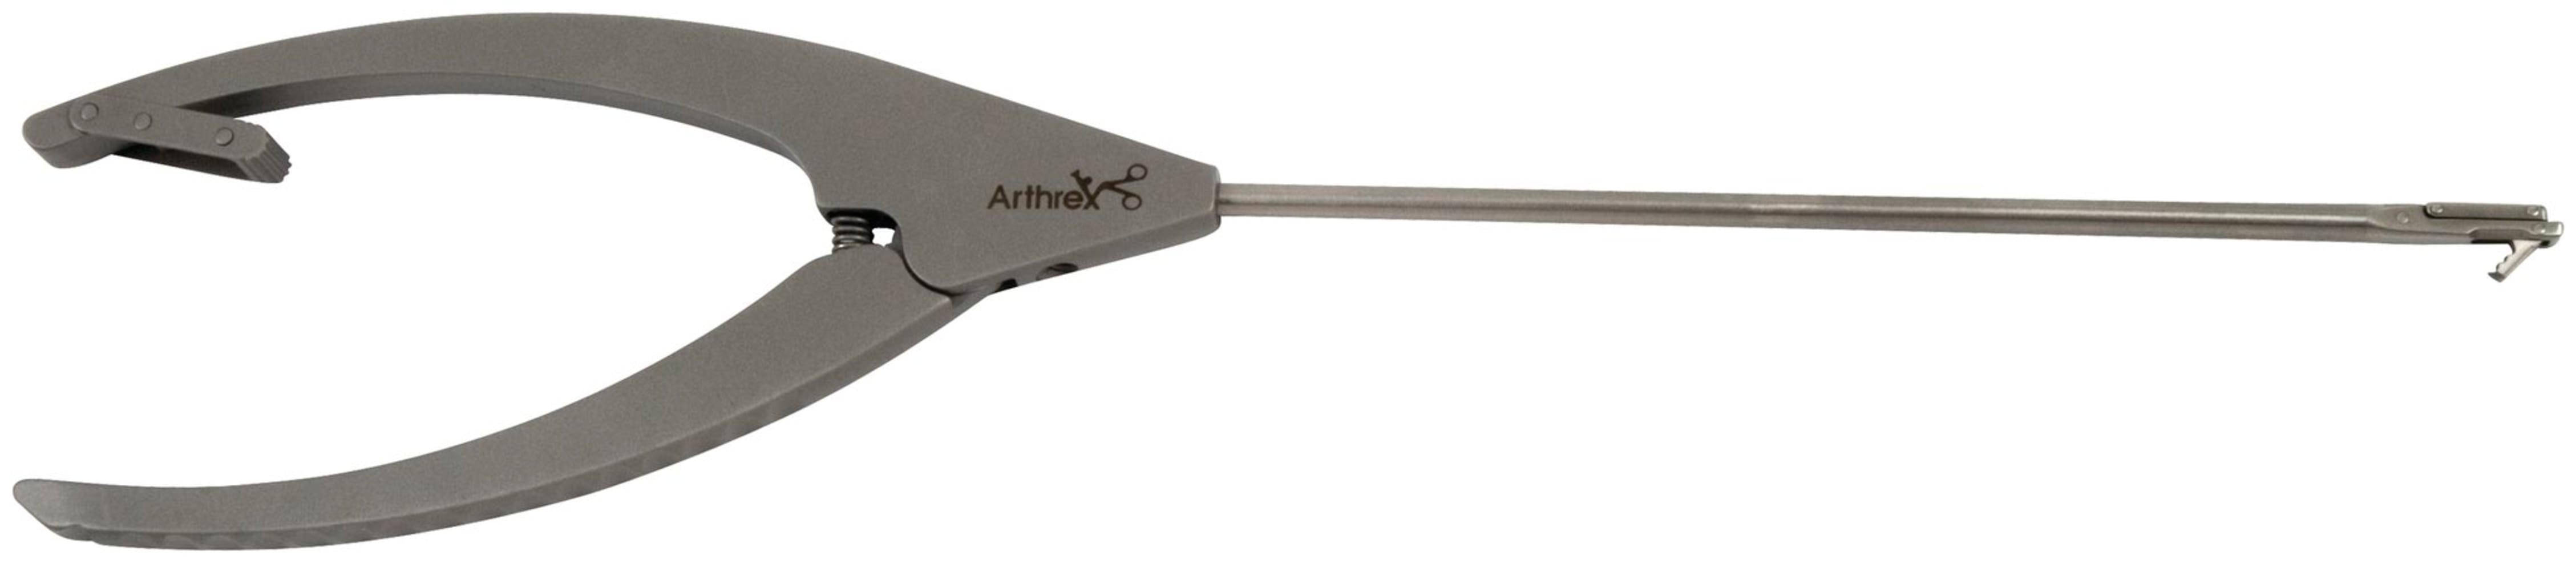 WishBone Standard Punch, Ø 3.4 mm, Schaft gerade, Maul gerade, rückwärtsschneidend